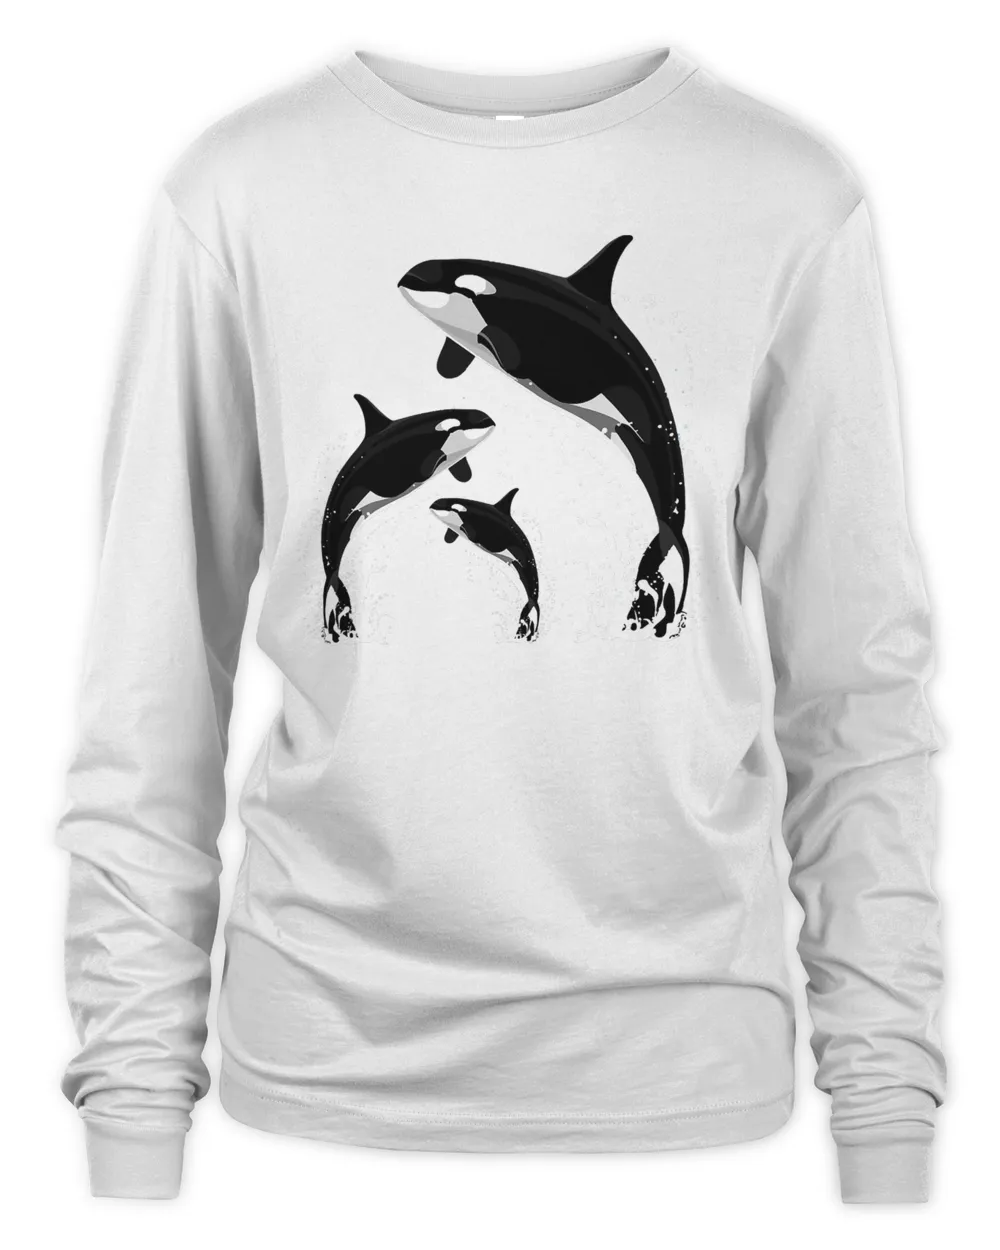 Killer Whale Gifts Shirt. Jumping Orca Killer Whales Killer